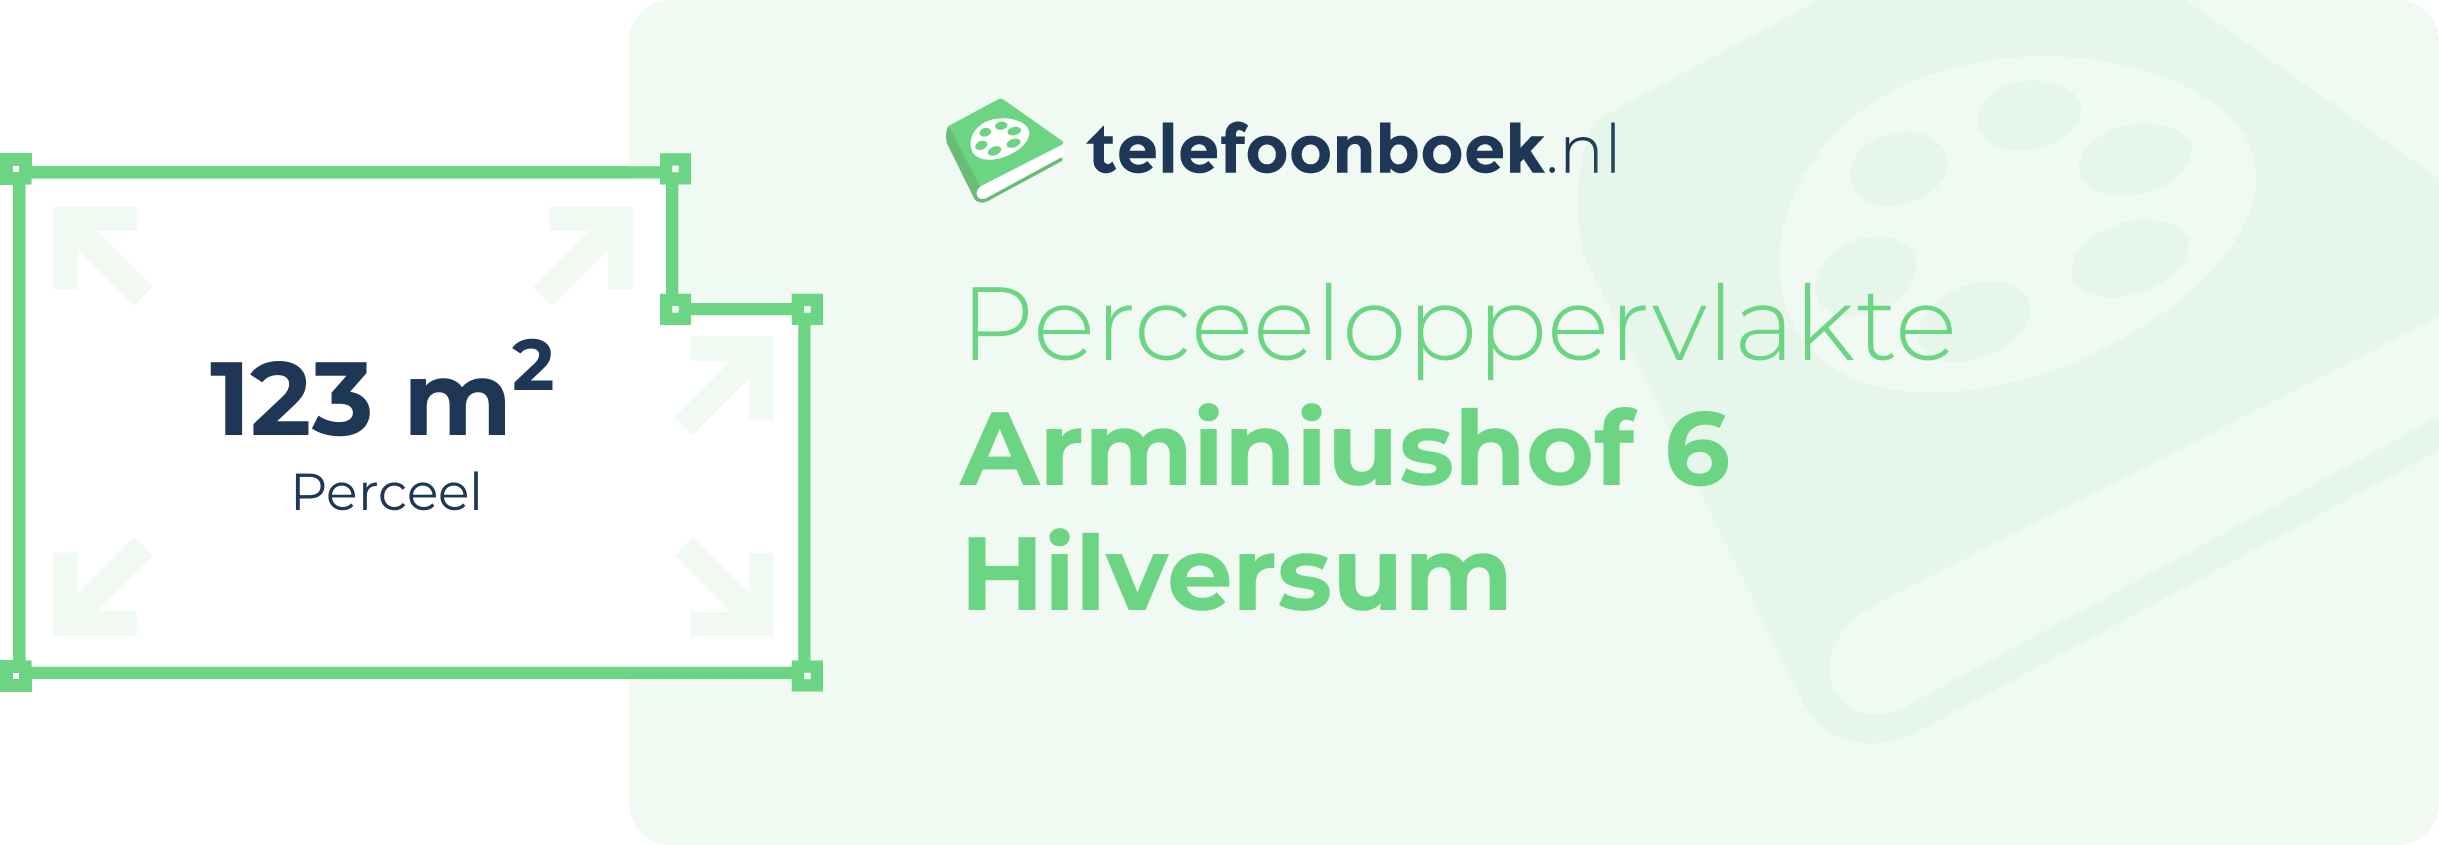 Perceeloppervlakte Arminiushof 6 Hilversum